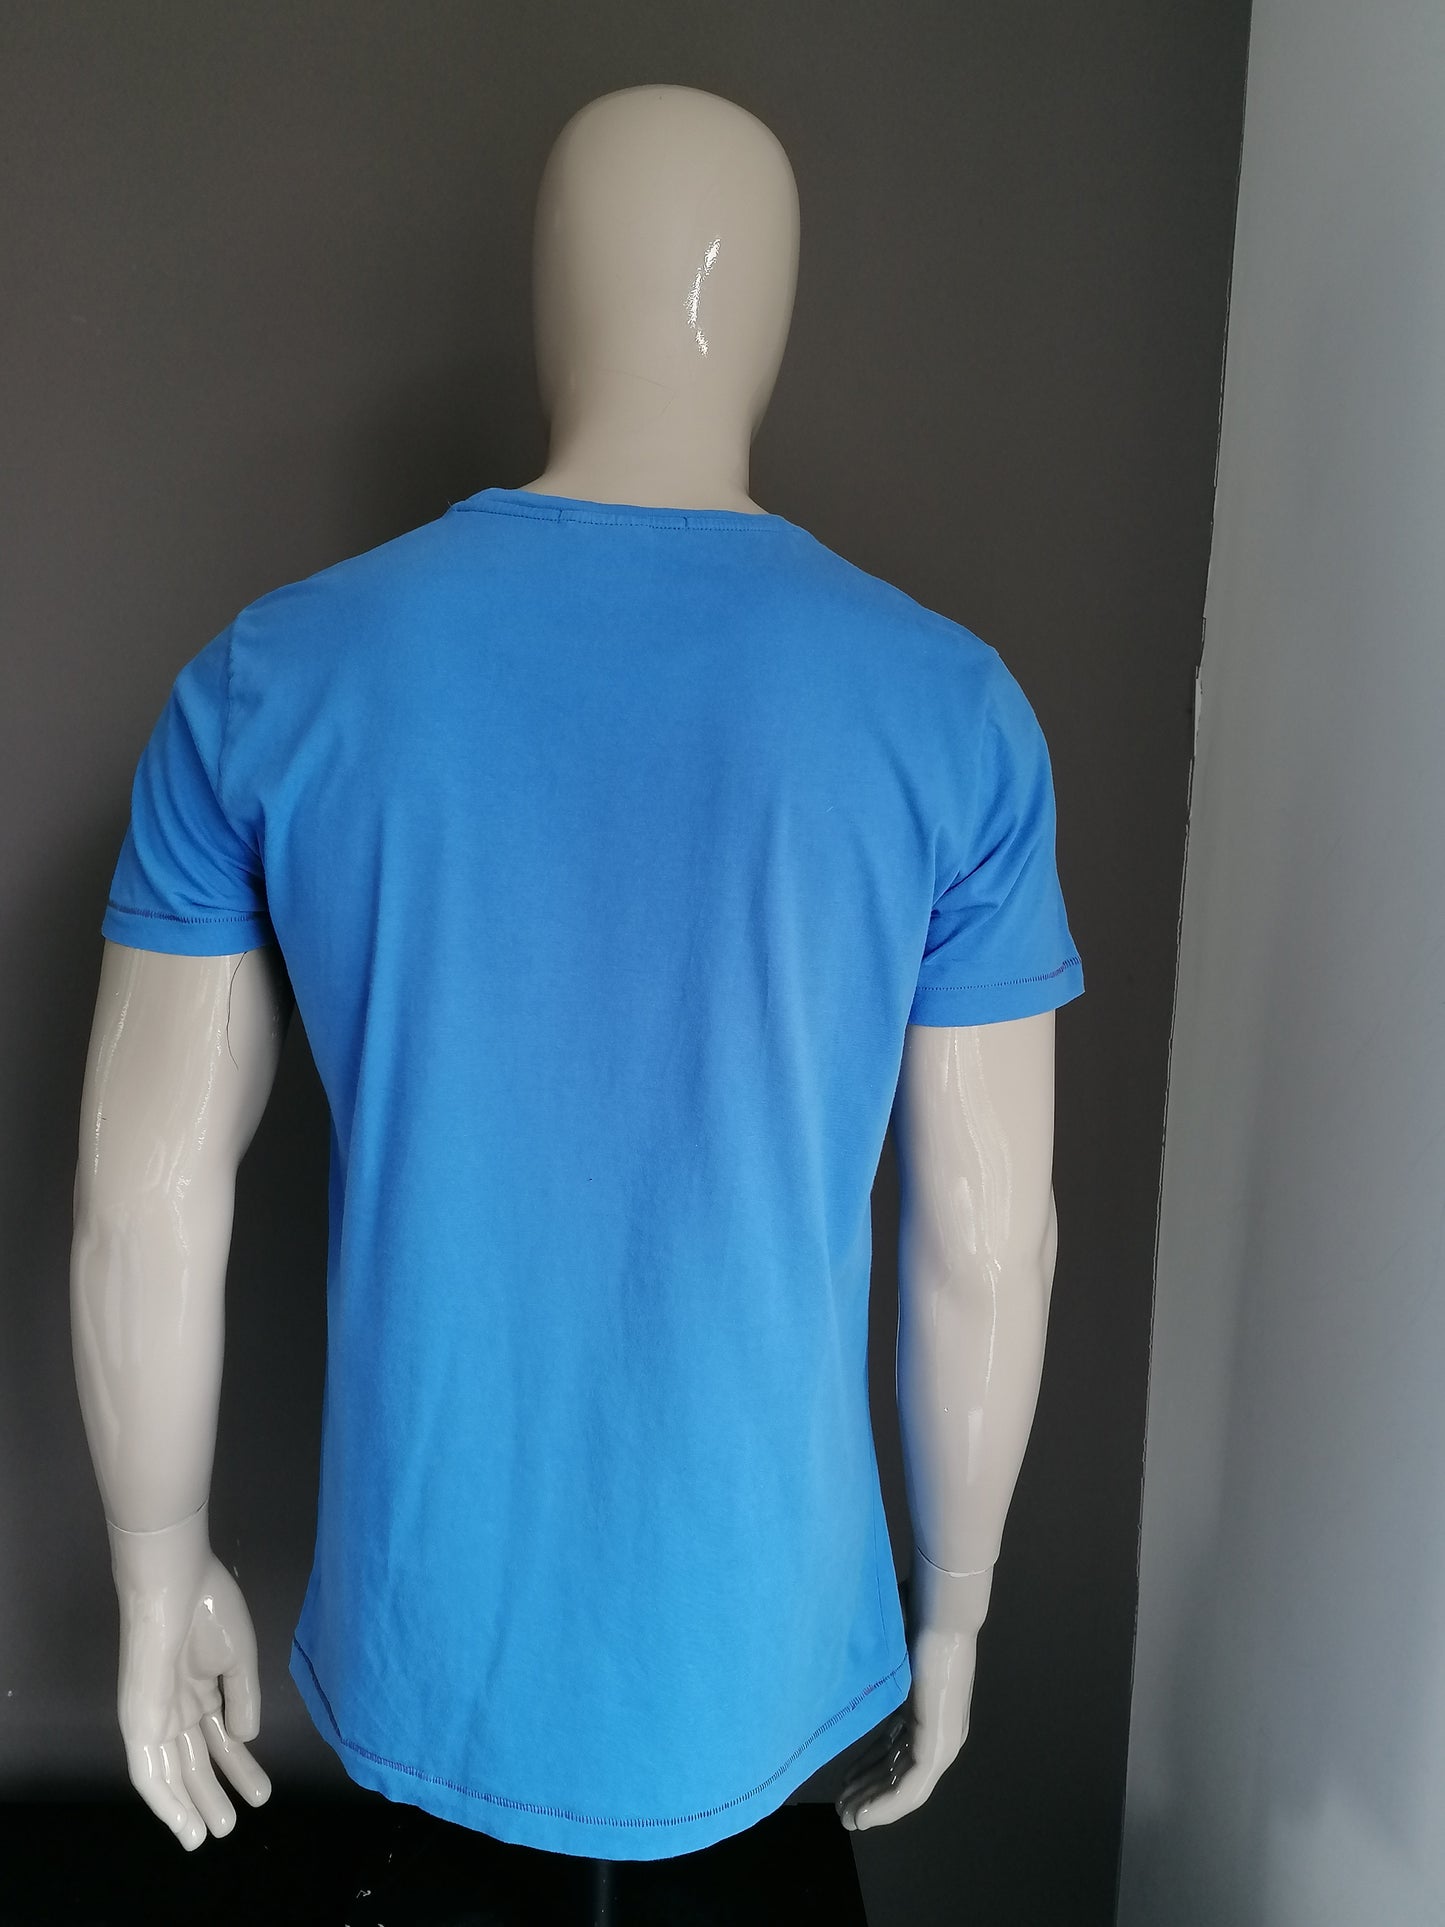 Ryan & Lewis shirt. Blue with print. Size XL.